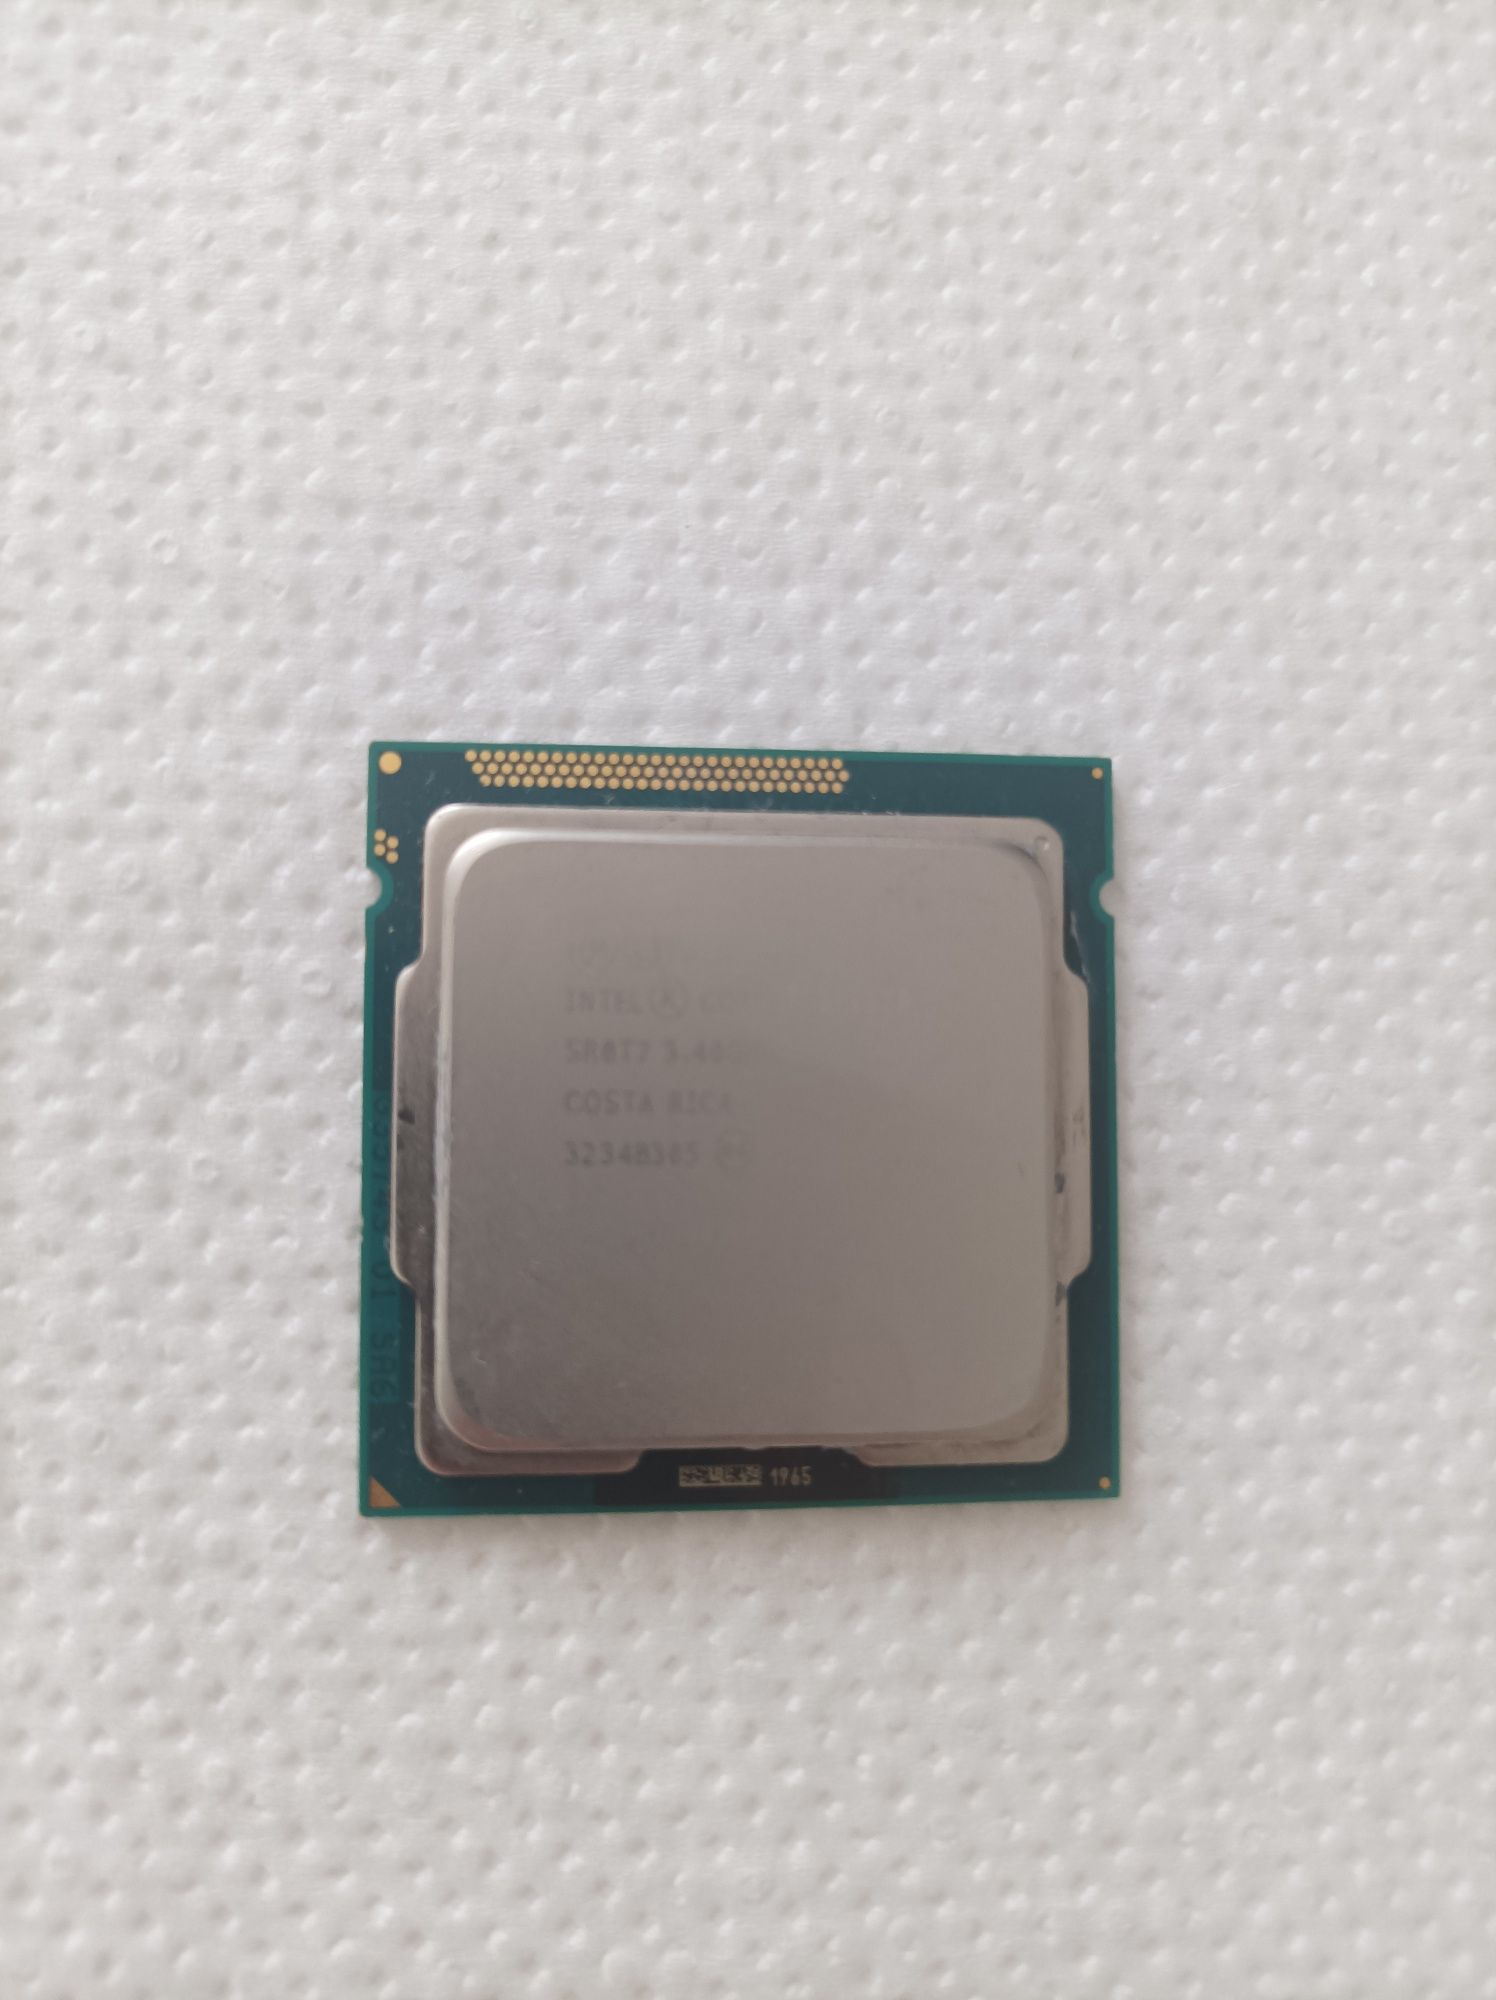 Intel core i5 3570 3.4 GHz